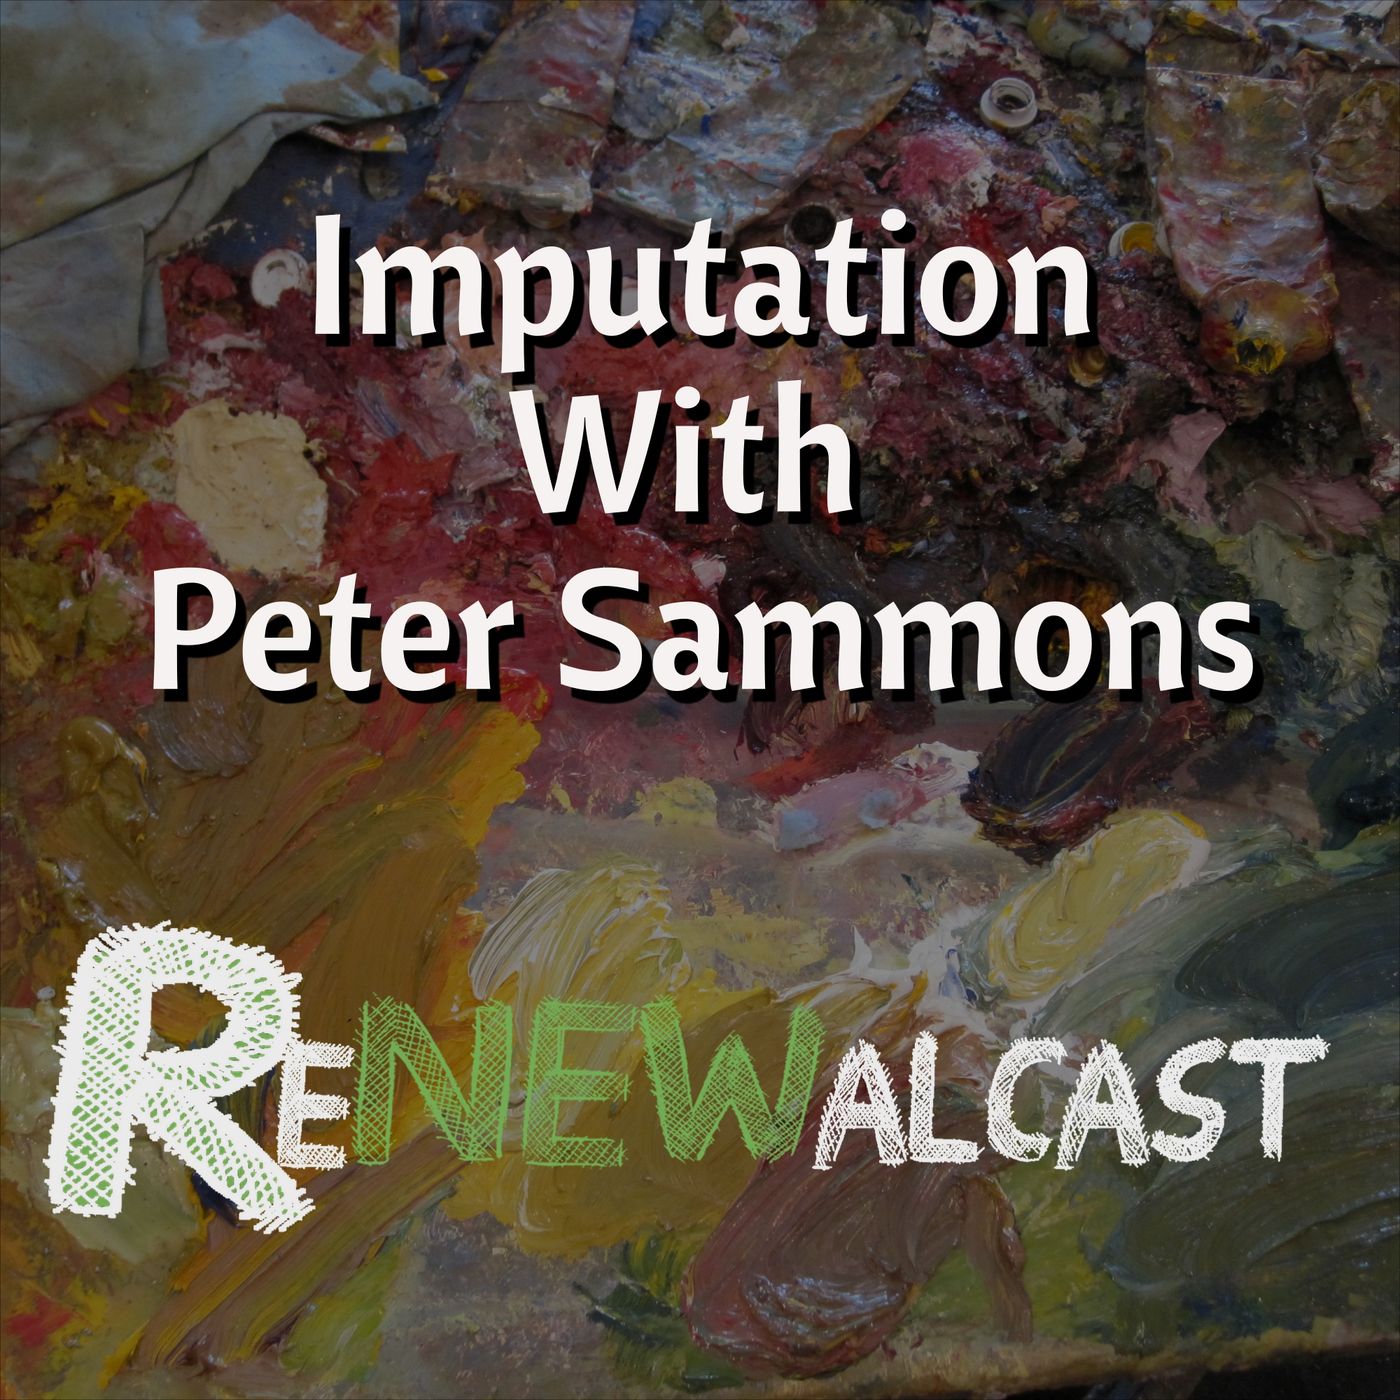 Imputation with Peter Sammons